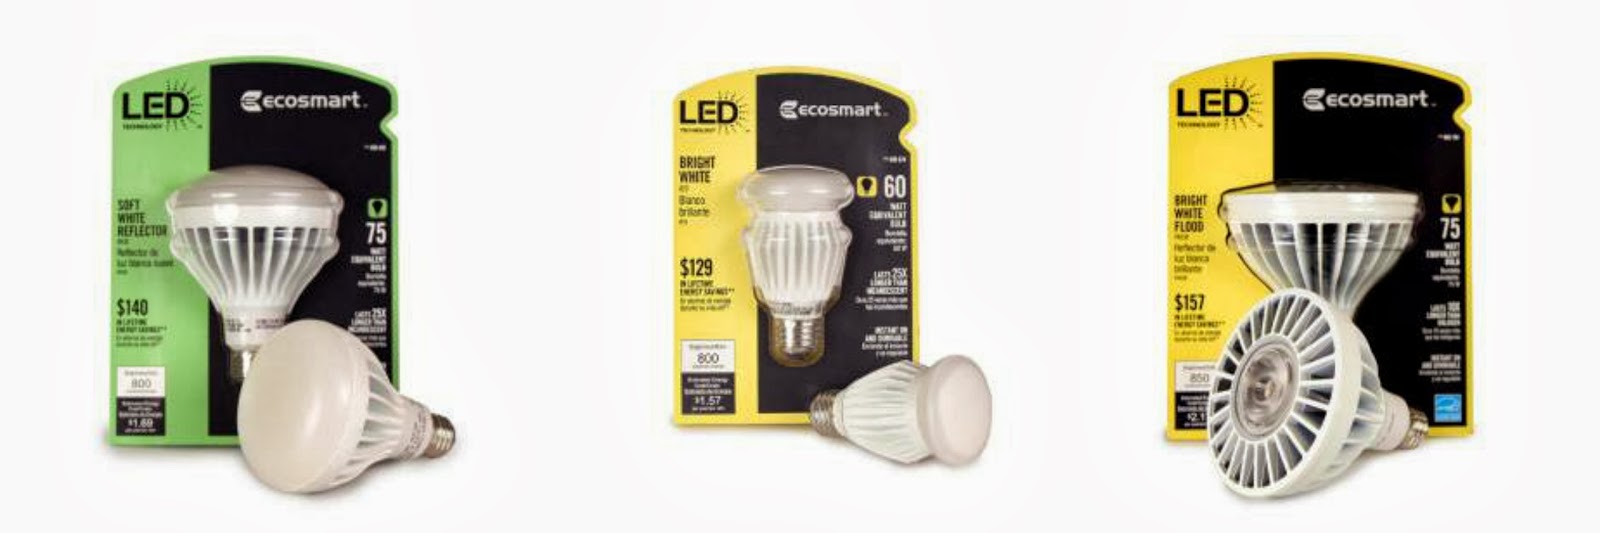 Coupon STL: Up to 50% off EcoSmart LED Light Bulb Value Packs